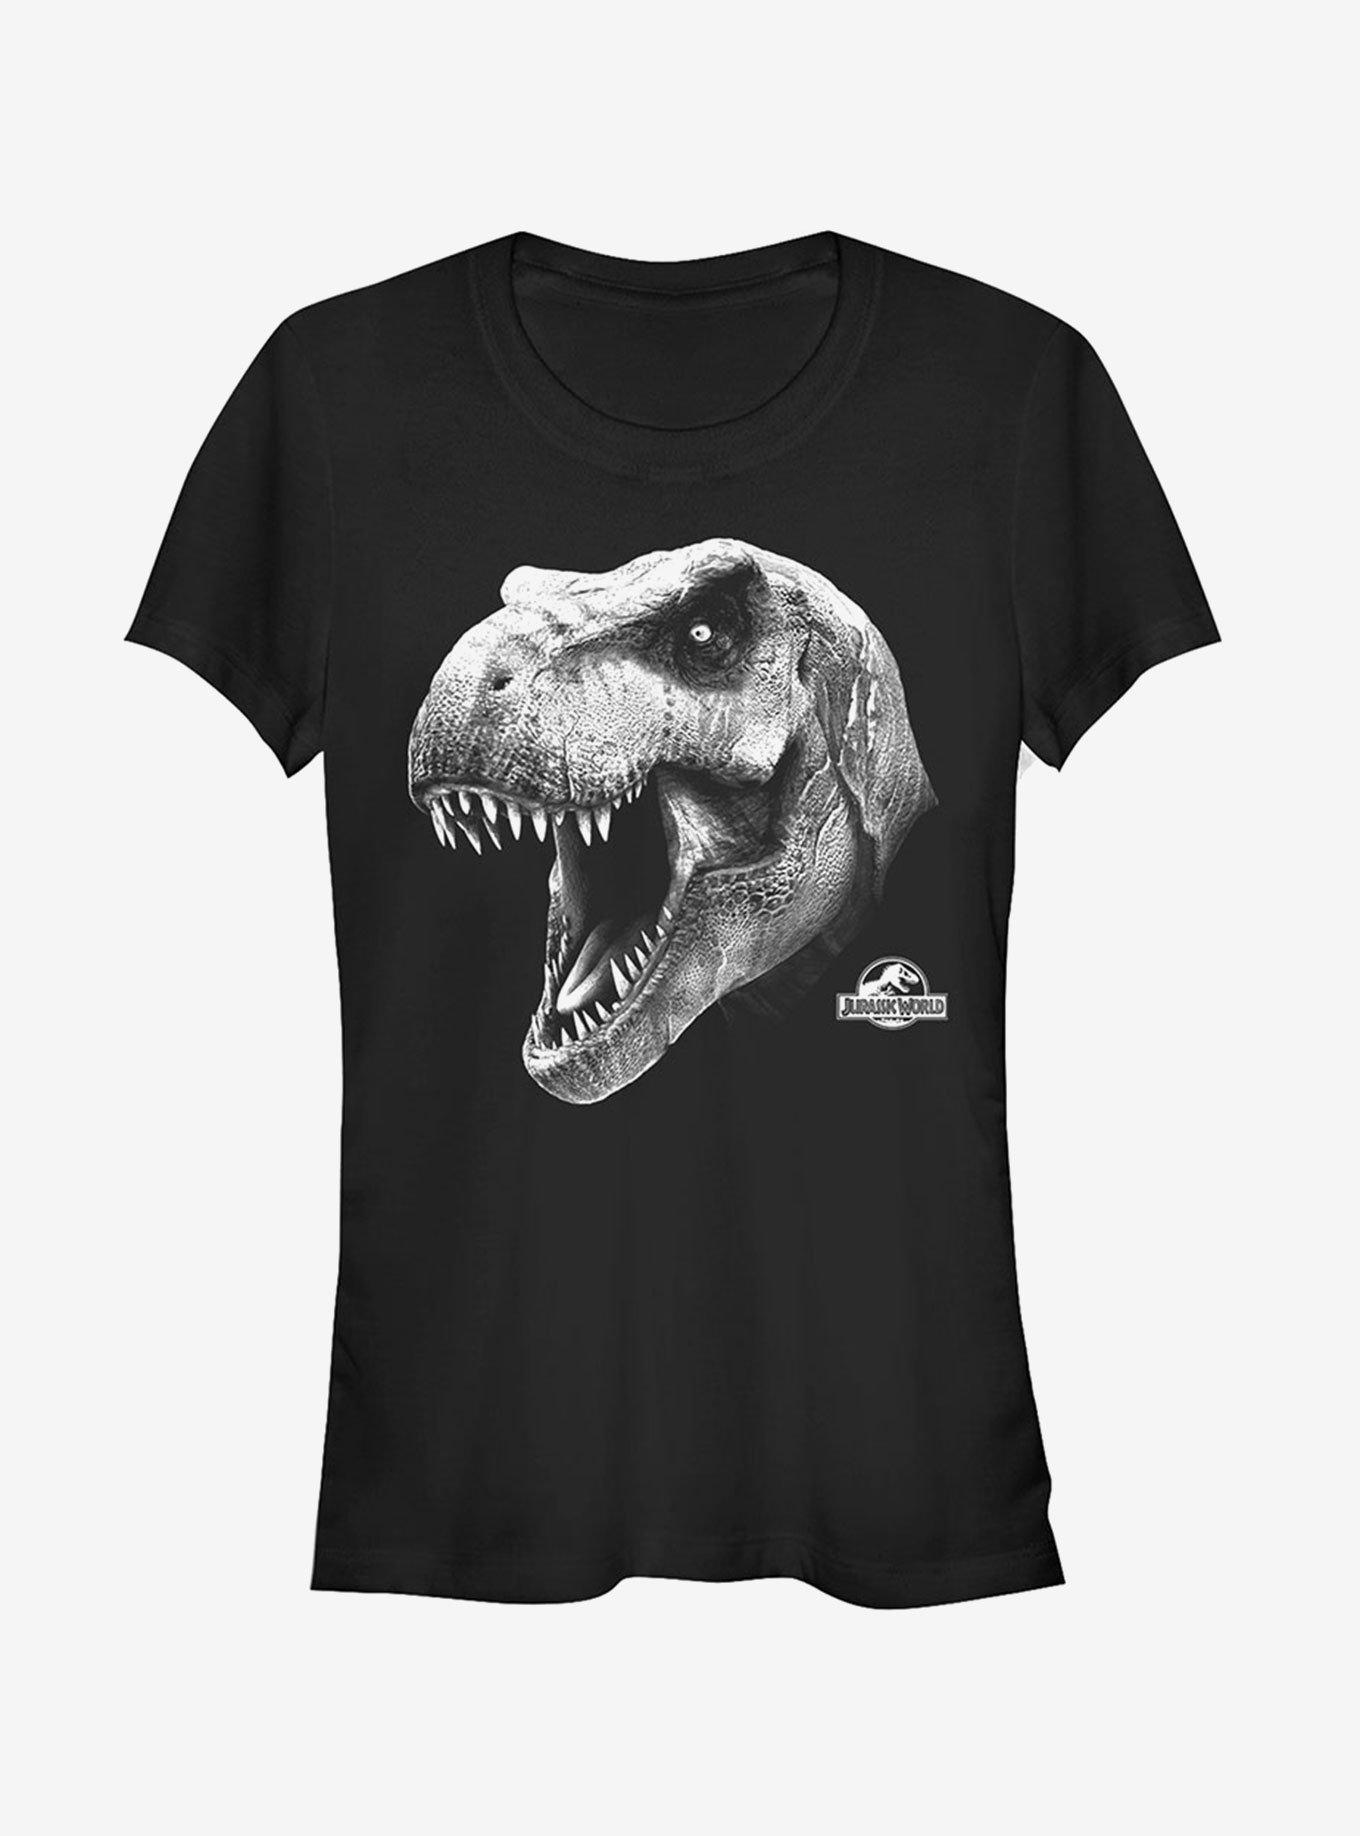 T. Rex Roar Girls T-Shirt, BLACK, hi-res